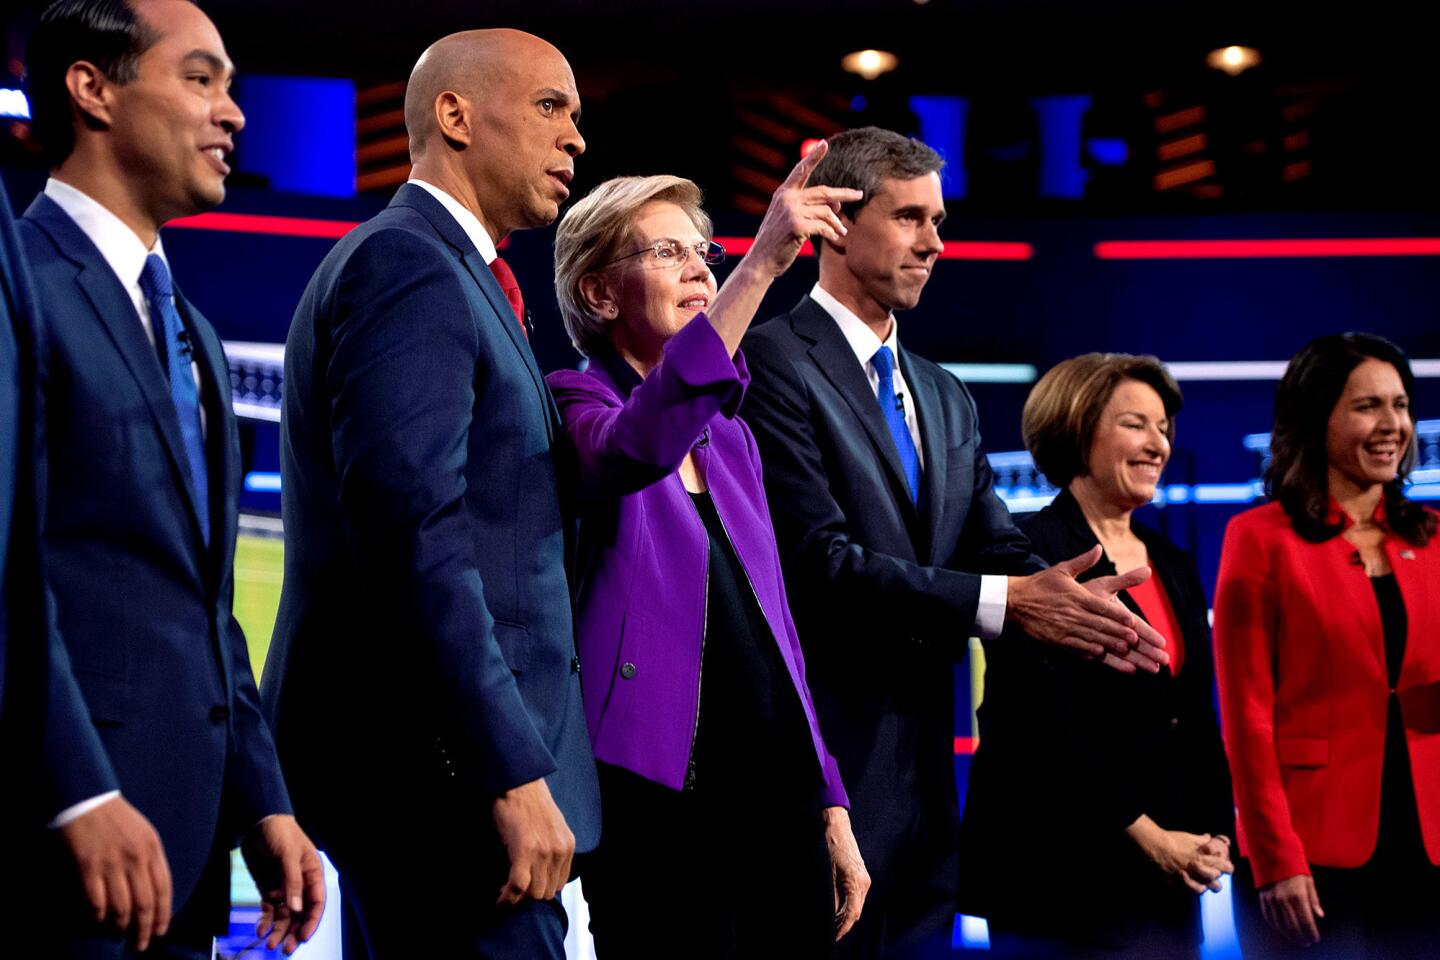 Julian Castro, Cory Booker, Elizabeth Warren, Beto O'Rourke, Amy Klobuchar and Tulsi Gabbard, from left, before the debate.